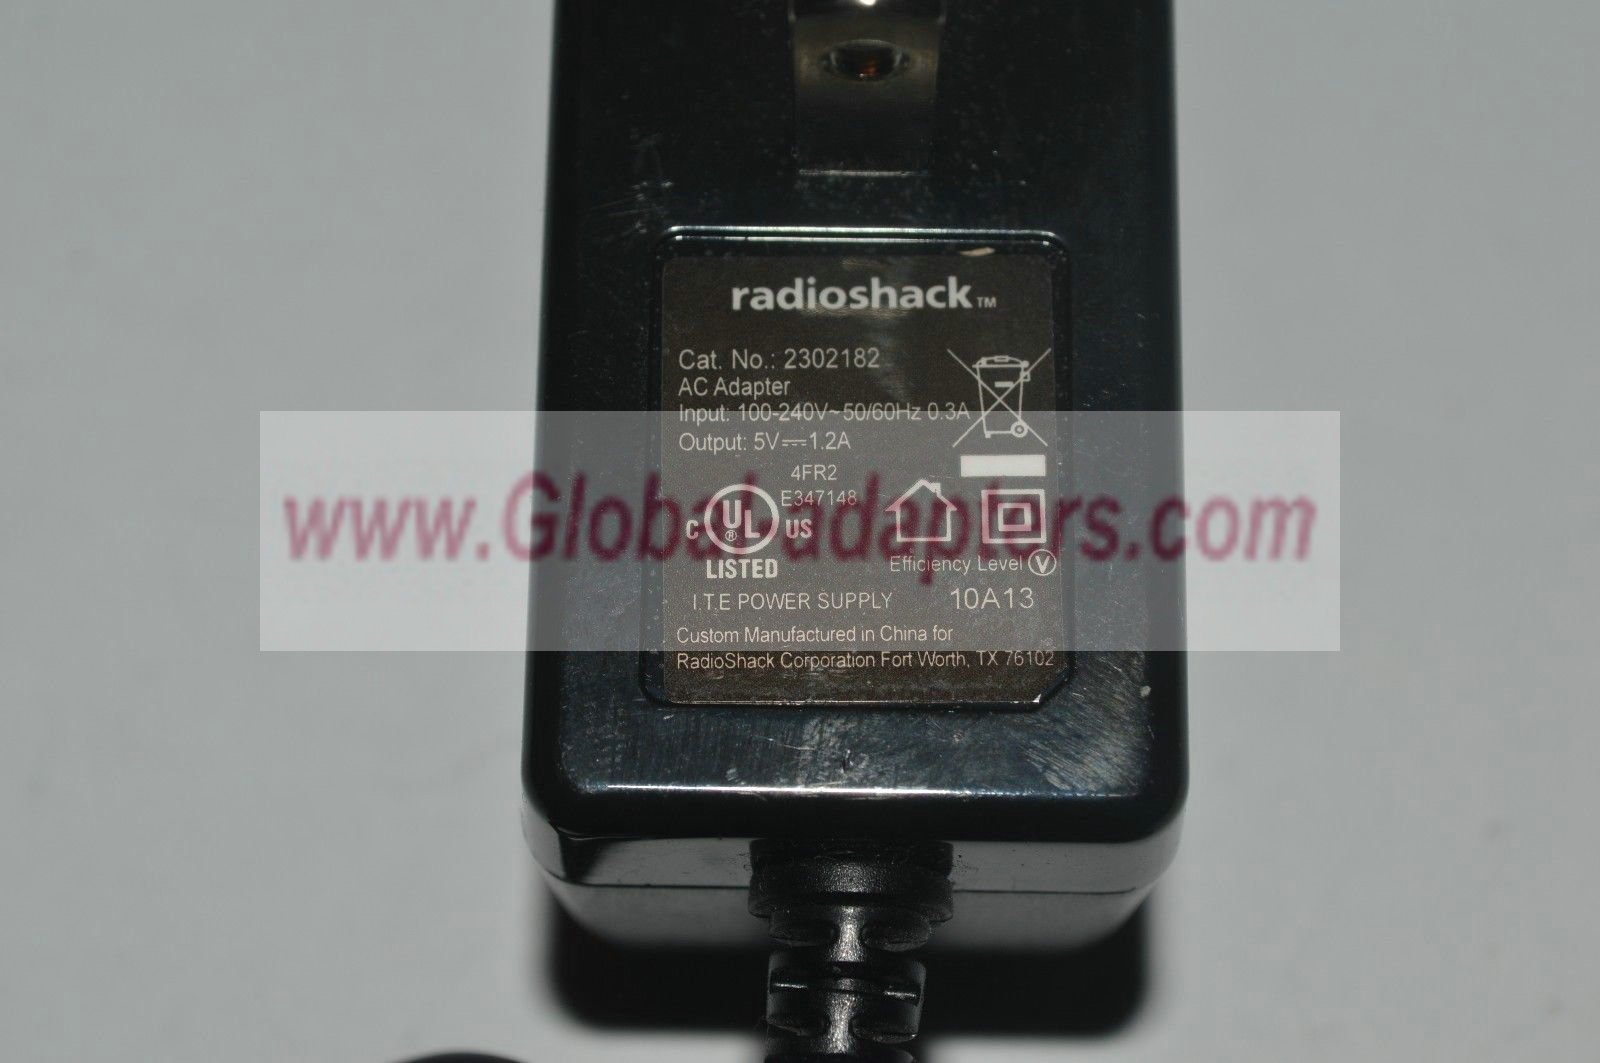 NEW 5V 1.2A RADIOSHACK 2302182 Ac Adapter - Click Image to Close